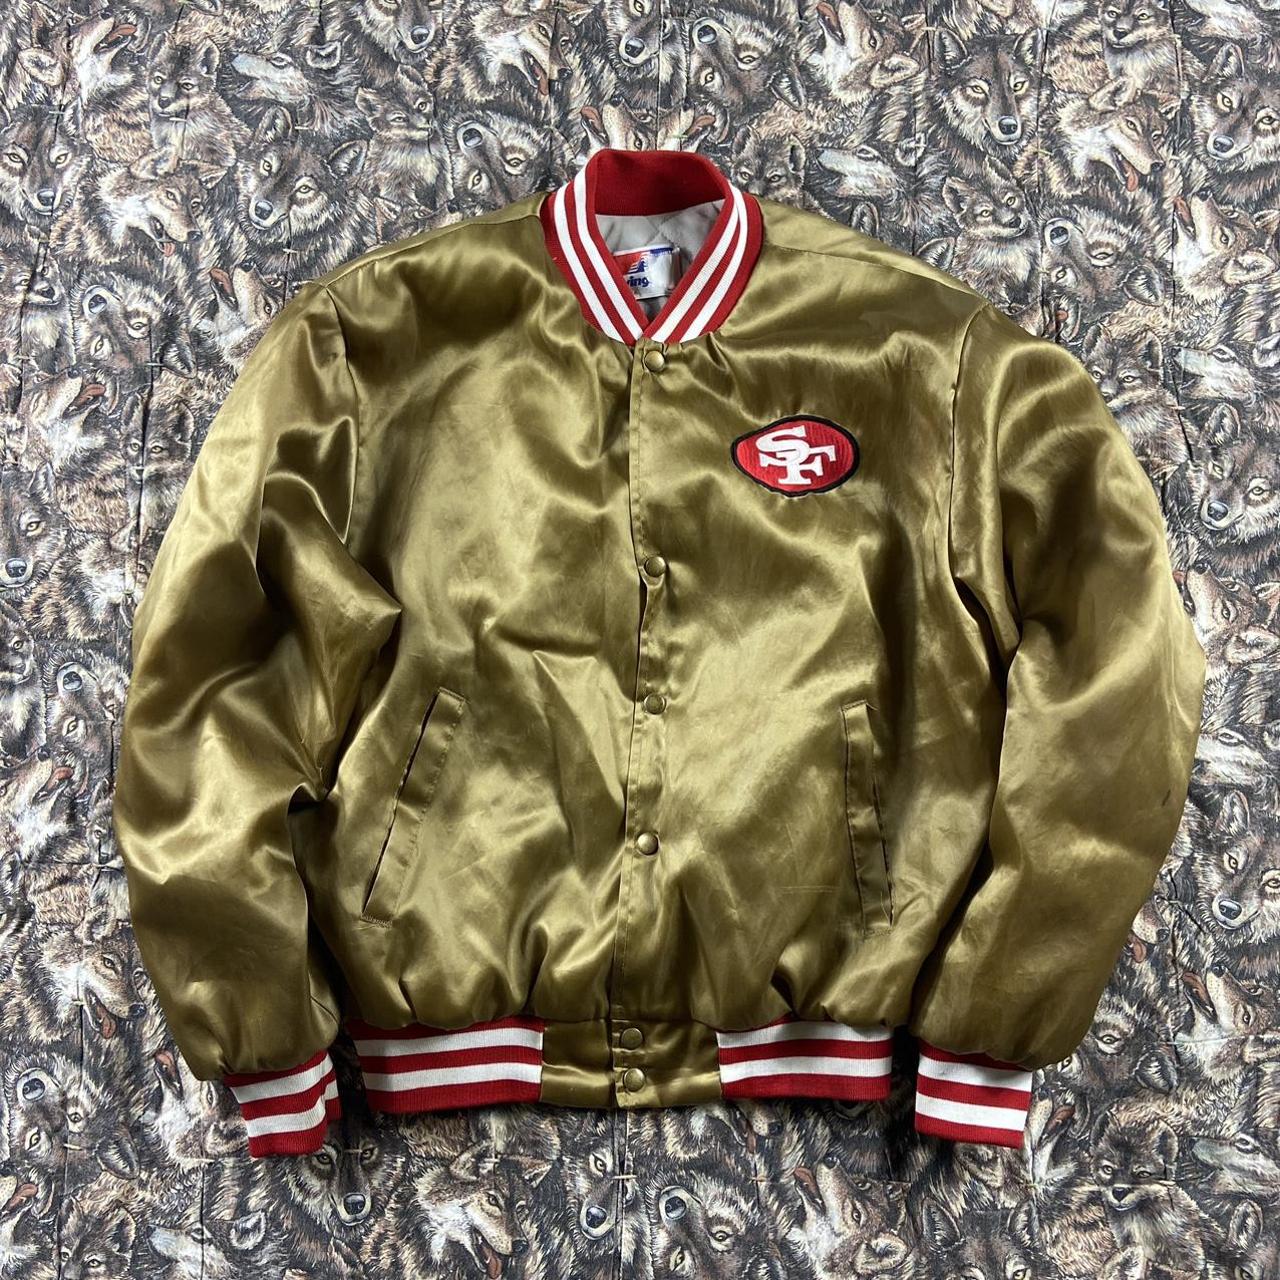 swingster 49ers jacket